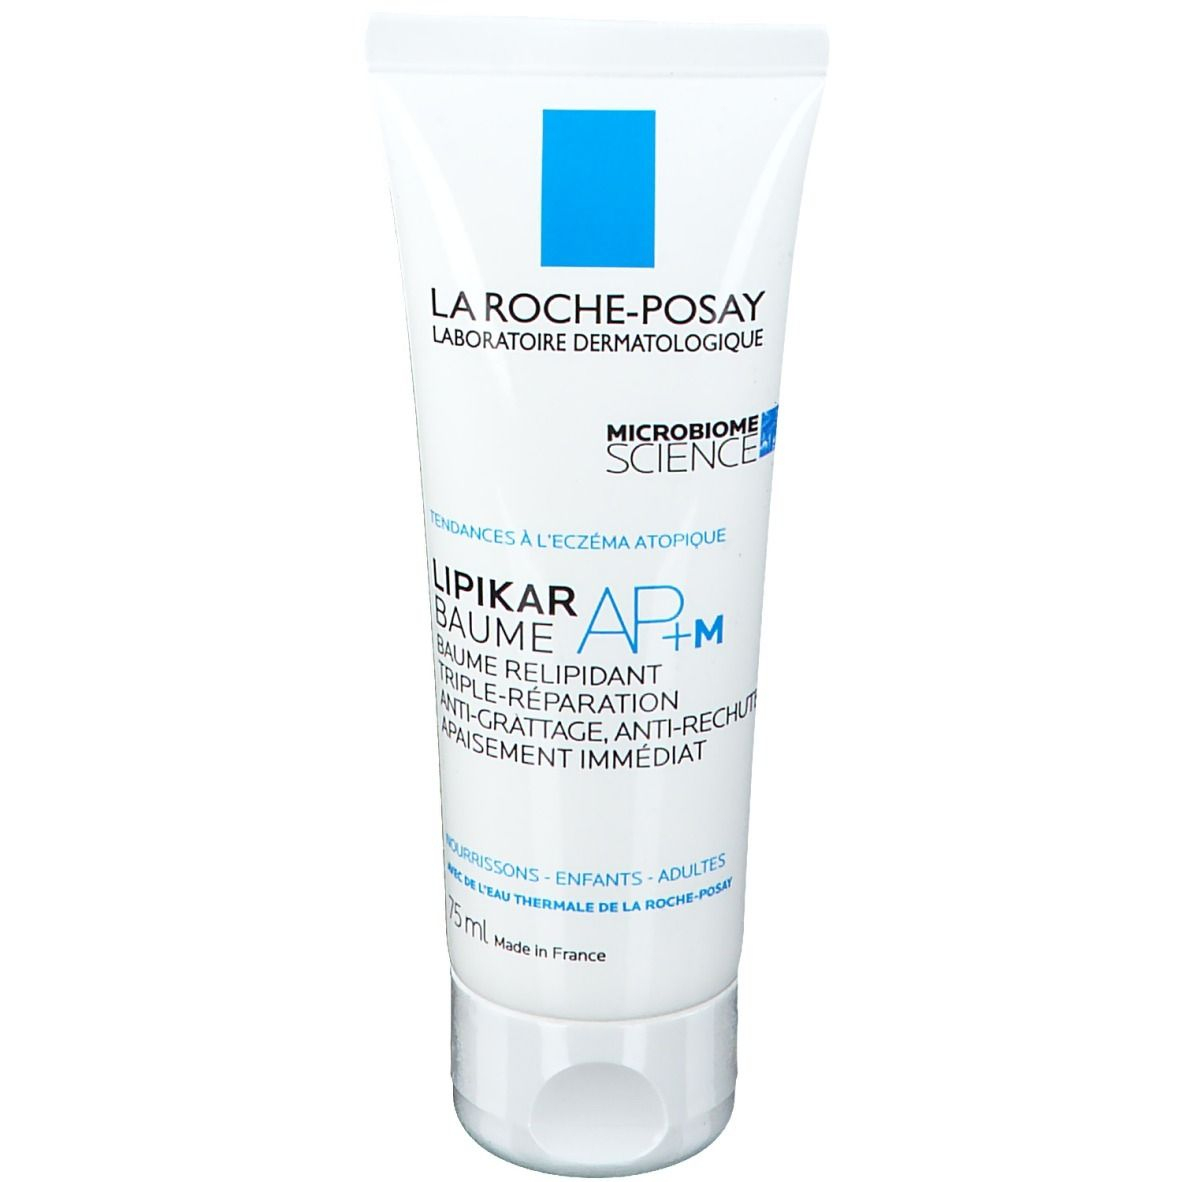 La Roche Posay Lipikar Baume Ap+ M - Shop-Pharmacie.fr encequiconcerne Laroche Posay Lipkar